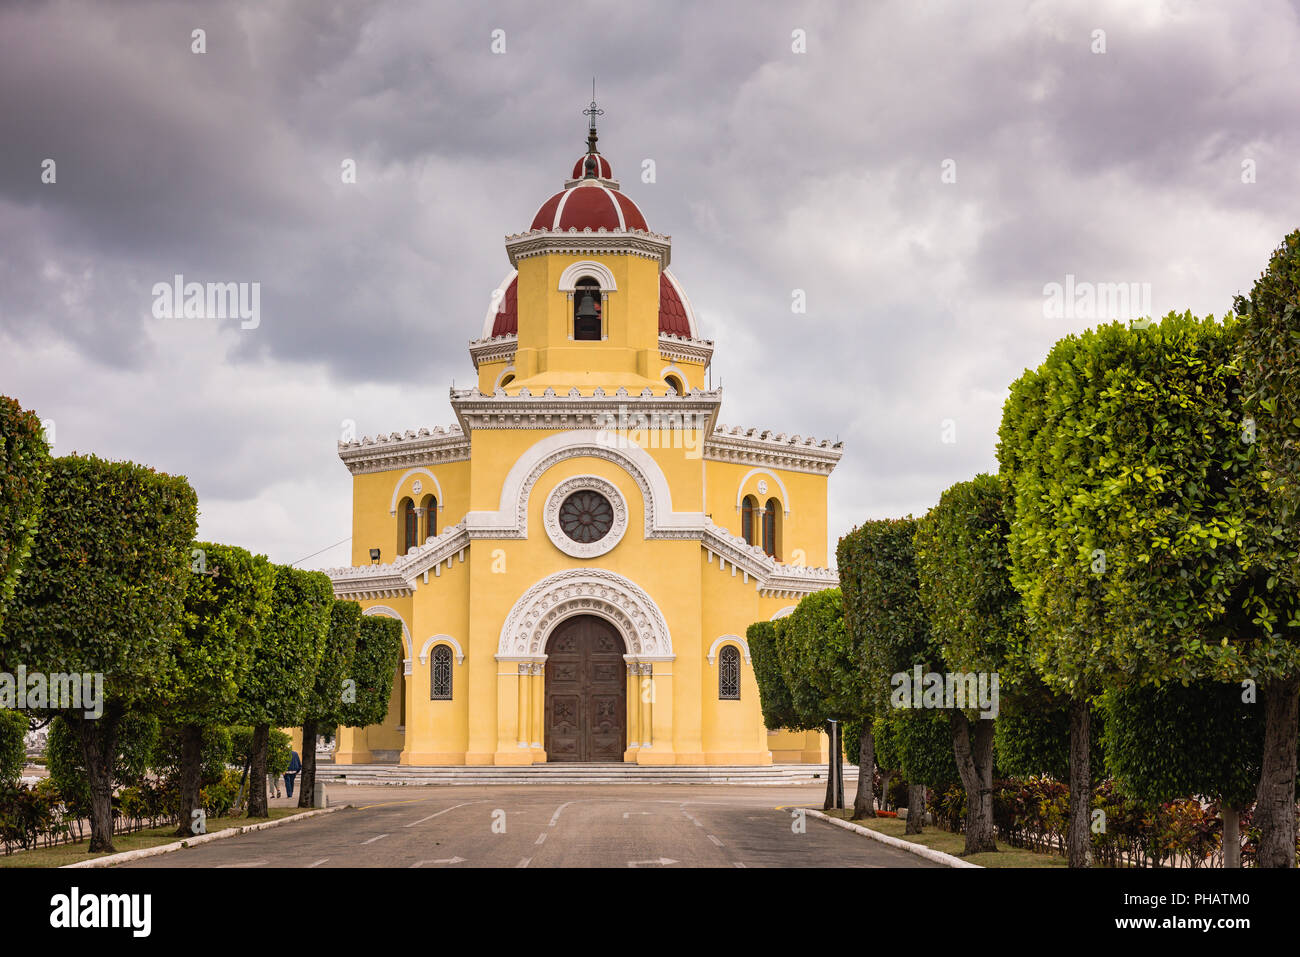 Gelbe Kirche mit Kuppel und Turm in der Nekropole Cristobal Colon in Havanna, Kuba. Stockfoto